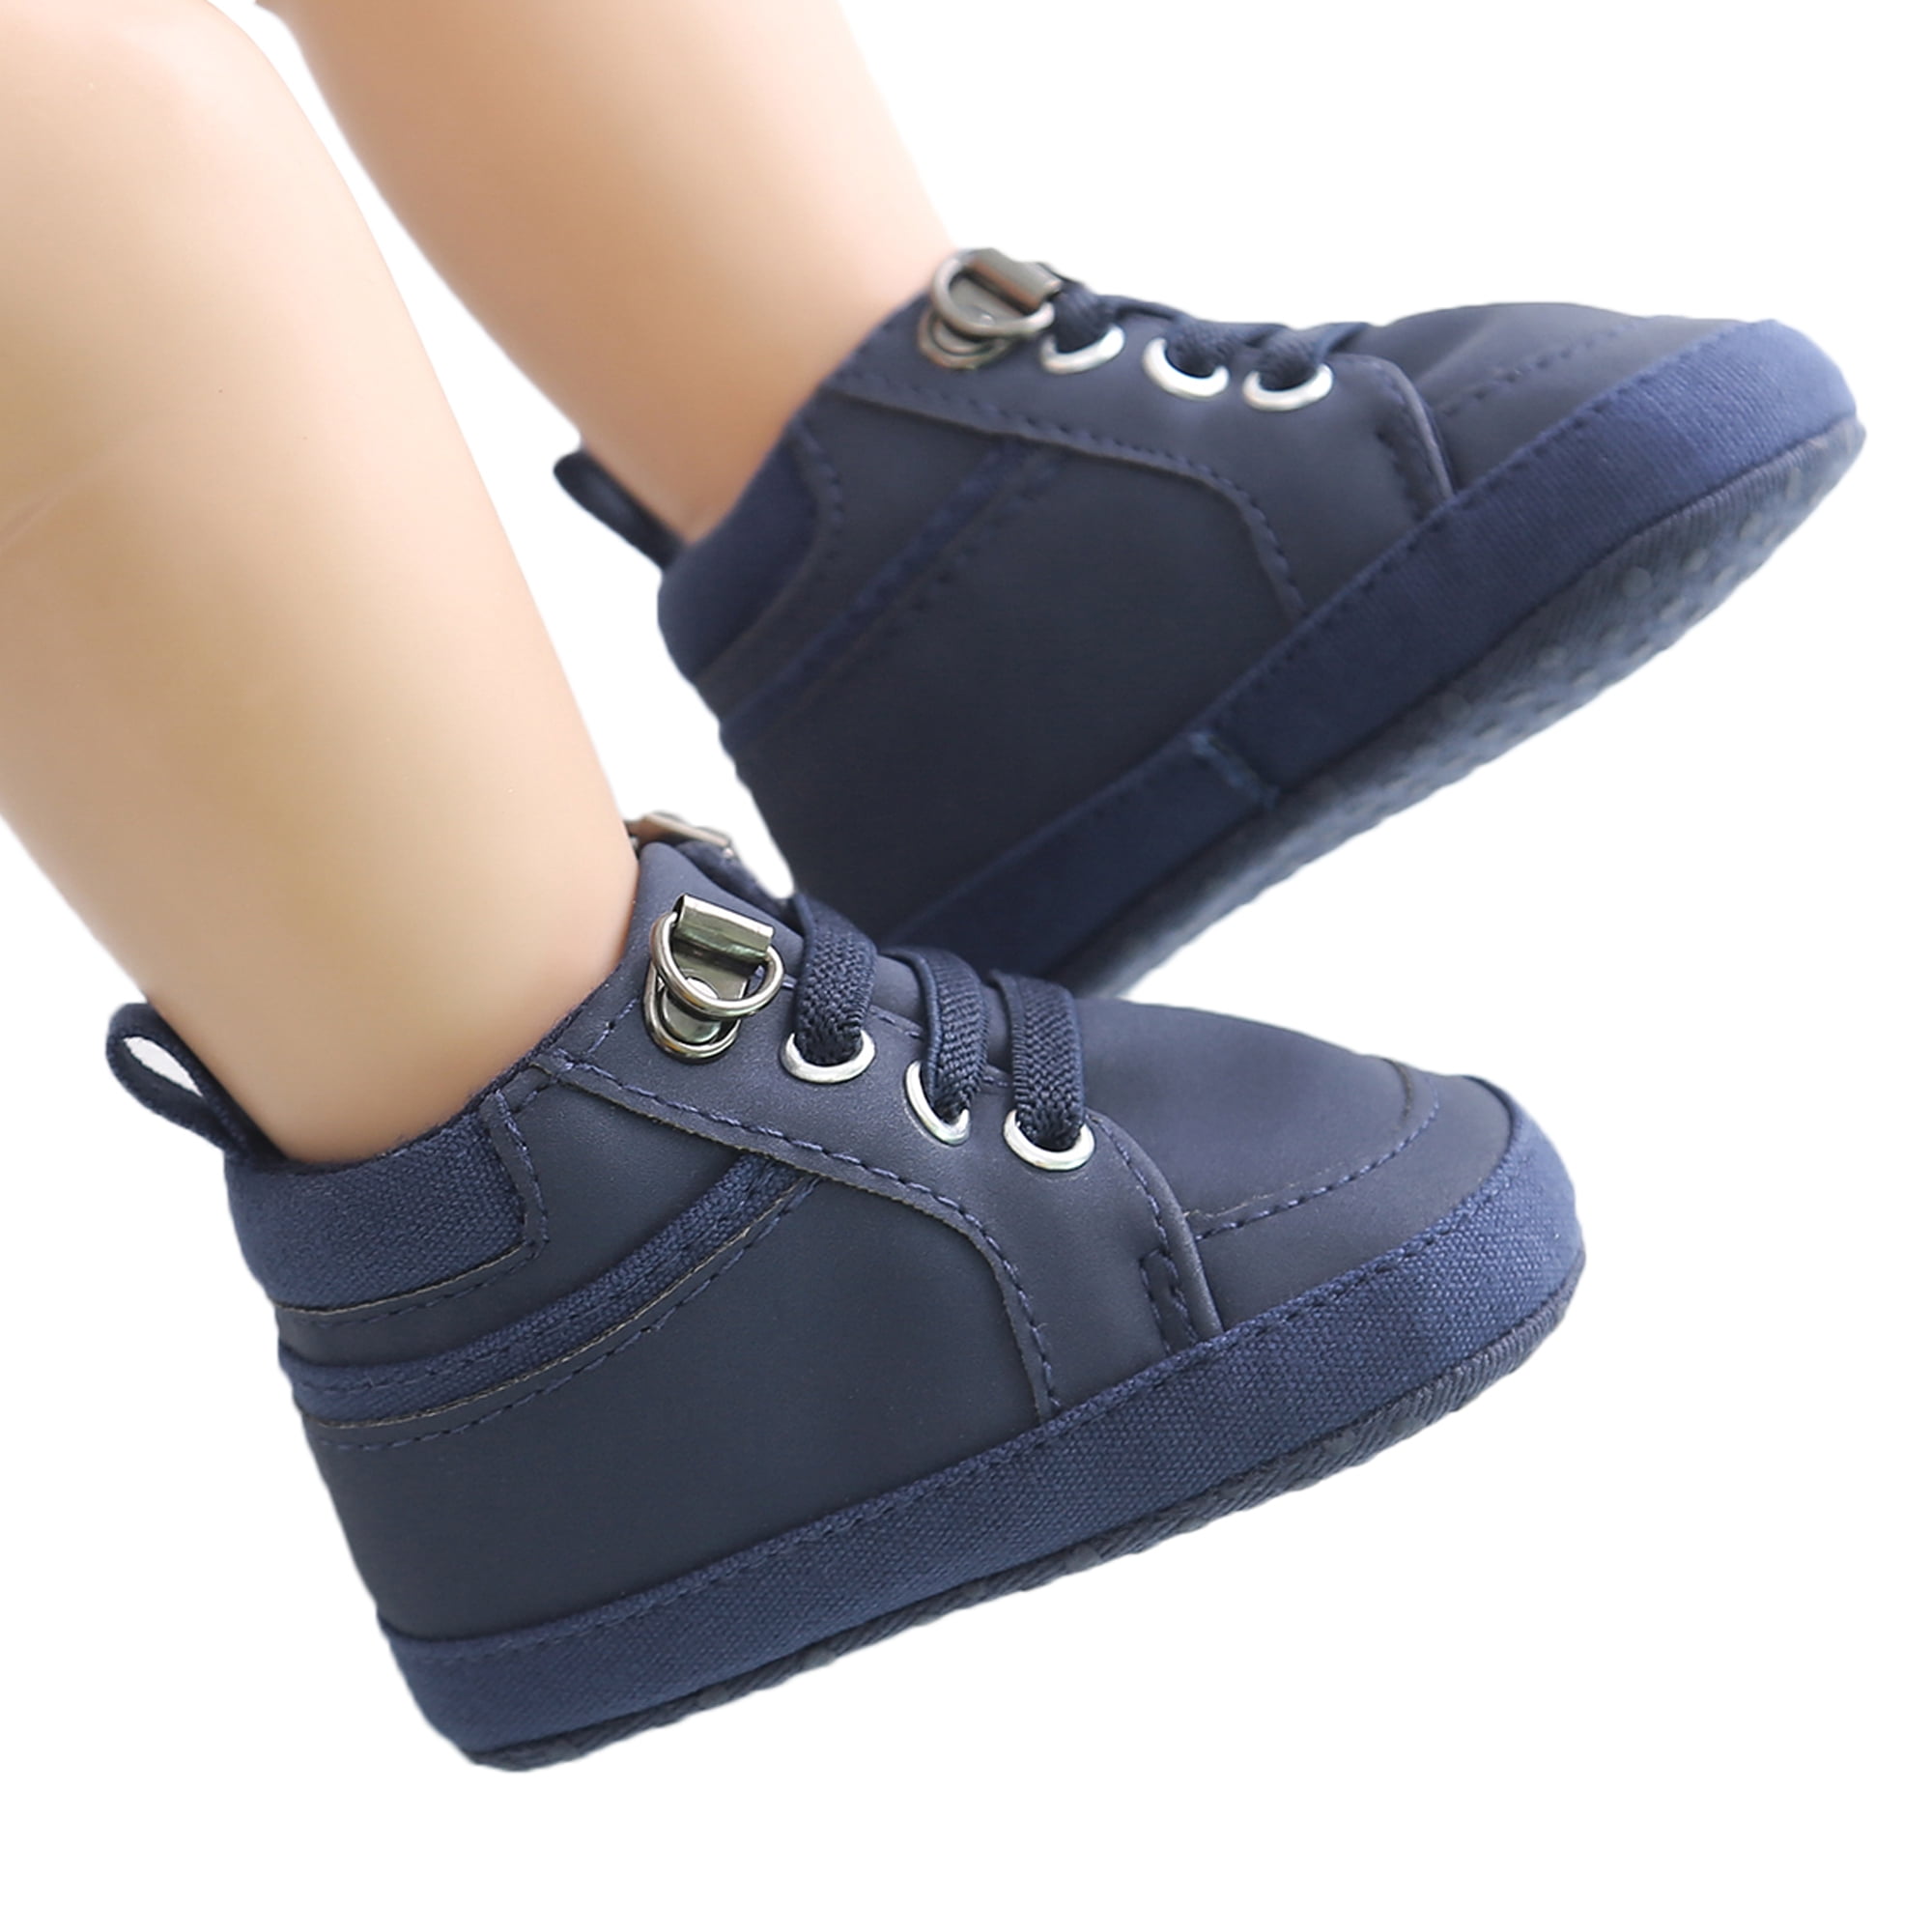 0-18M Newborn Baby Boy Soft Sole Crib Shoes Warm Boots Anti-slip Sneakers UK 